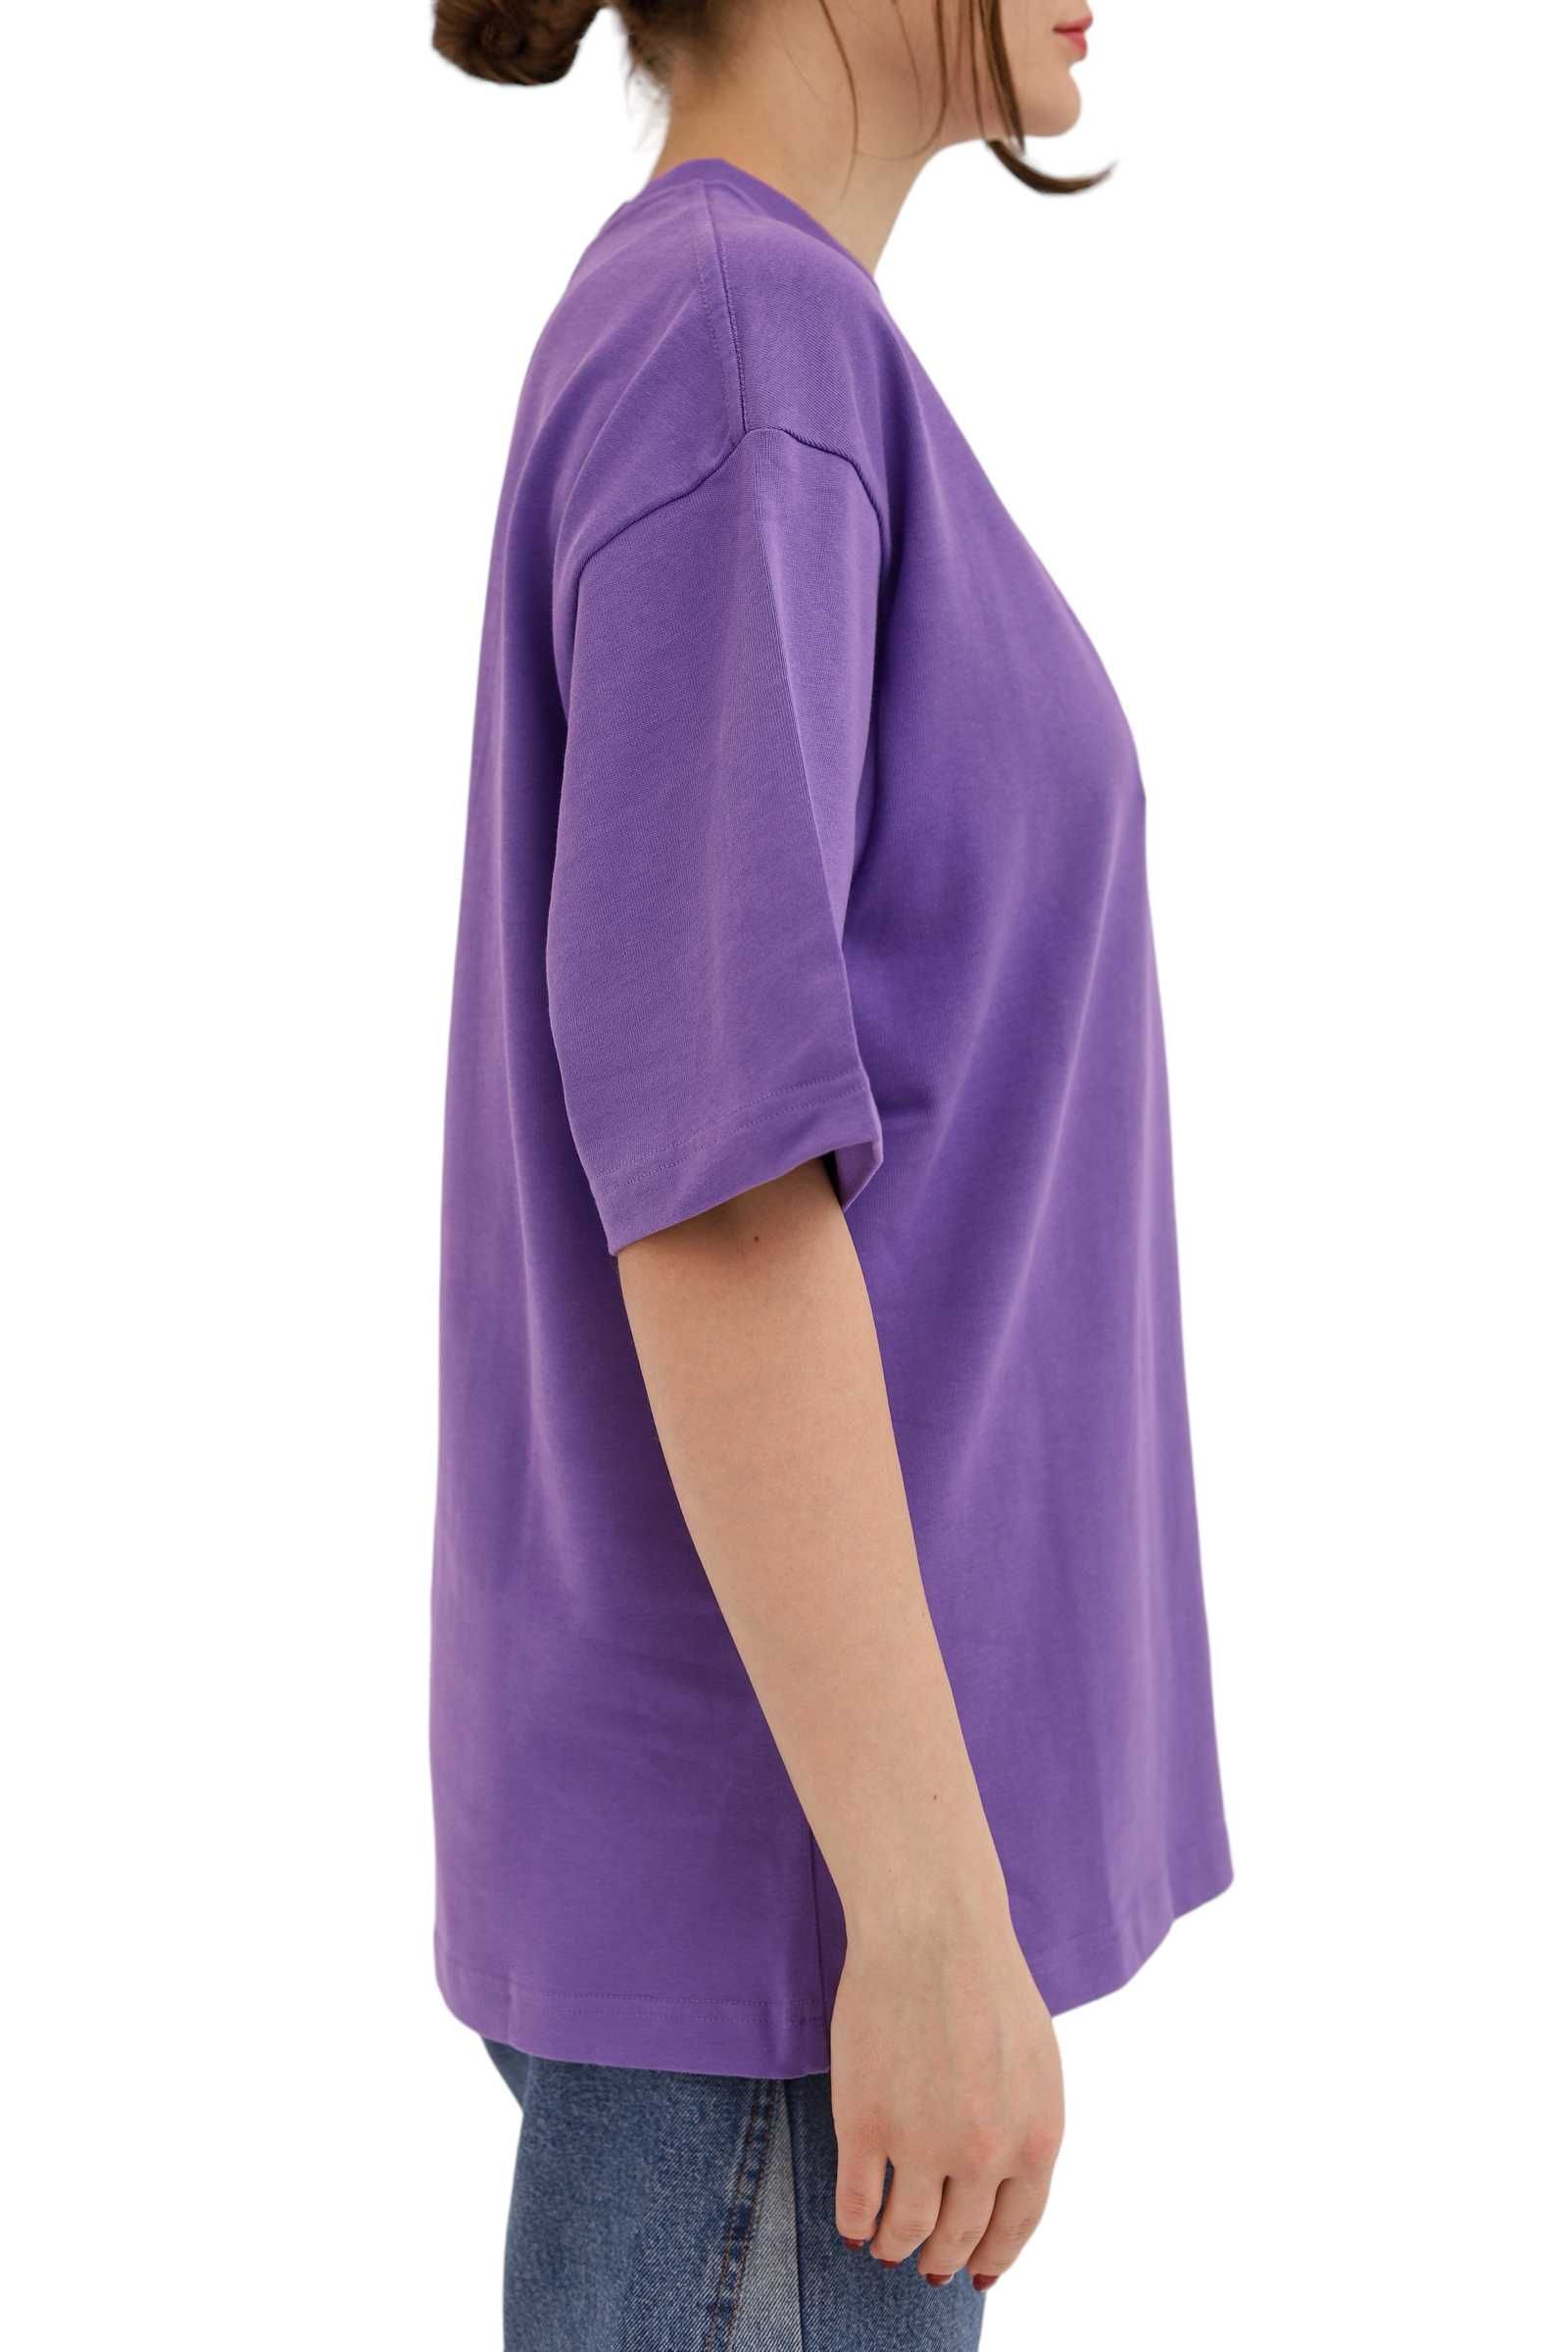 Футболка Acne Studios Inflatable Patch T-Shirt Iris Purple